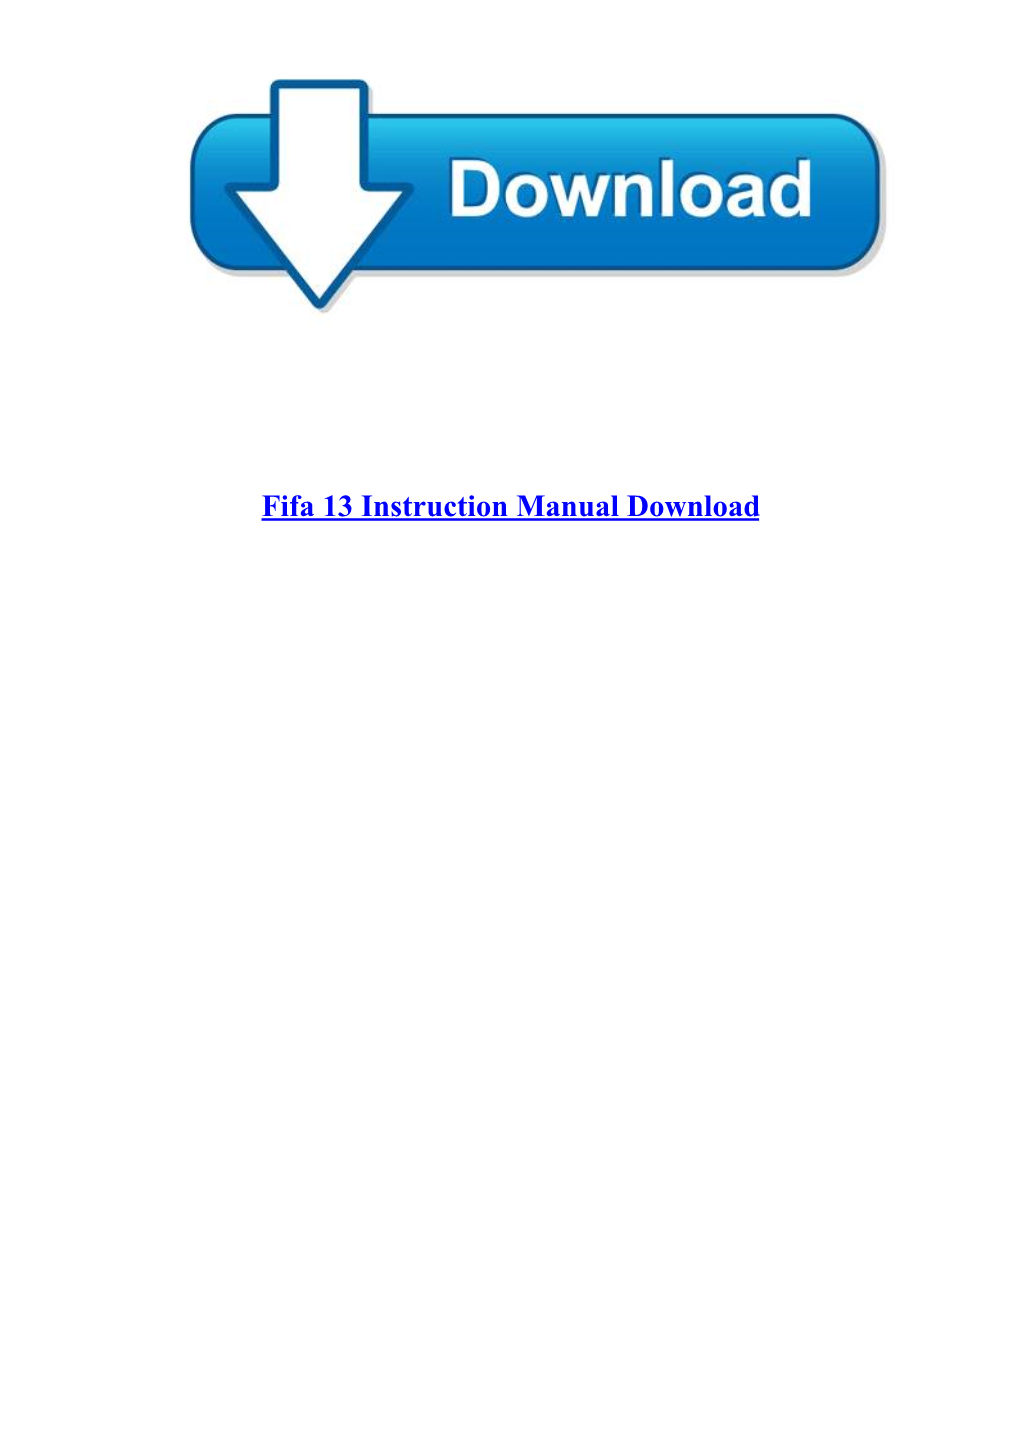 Fifa 13 Instruction Manual Download Fifa 13 Instruction Manual